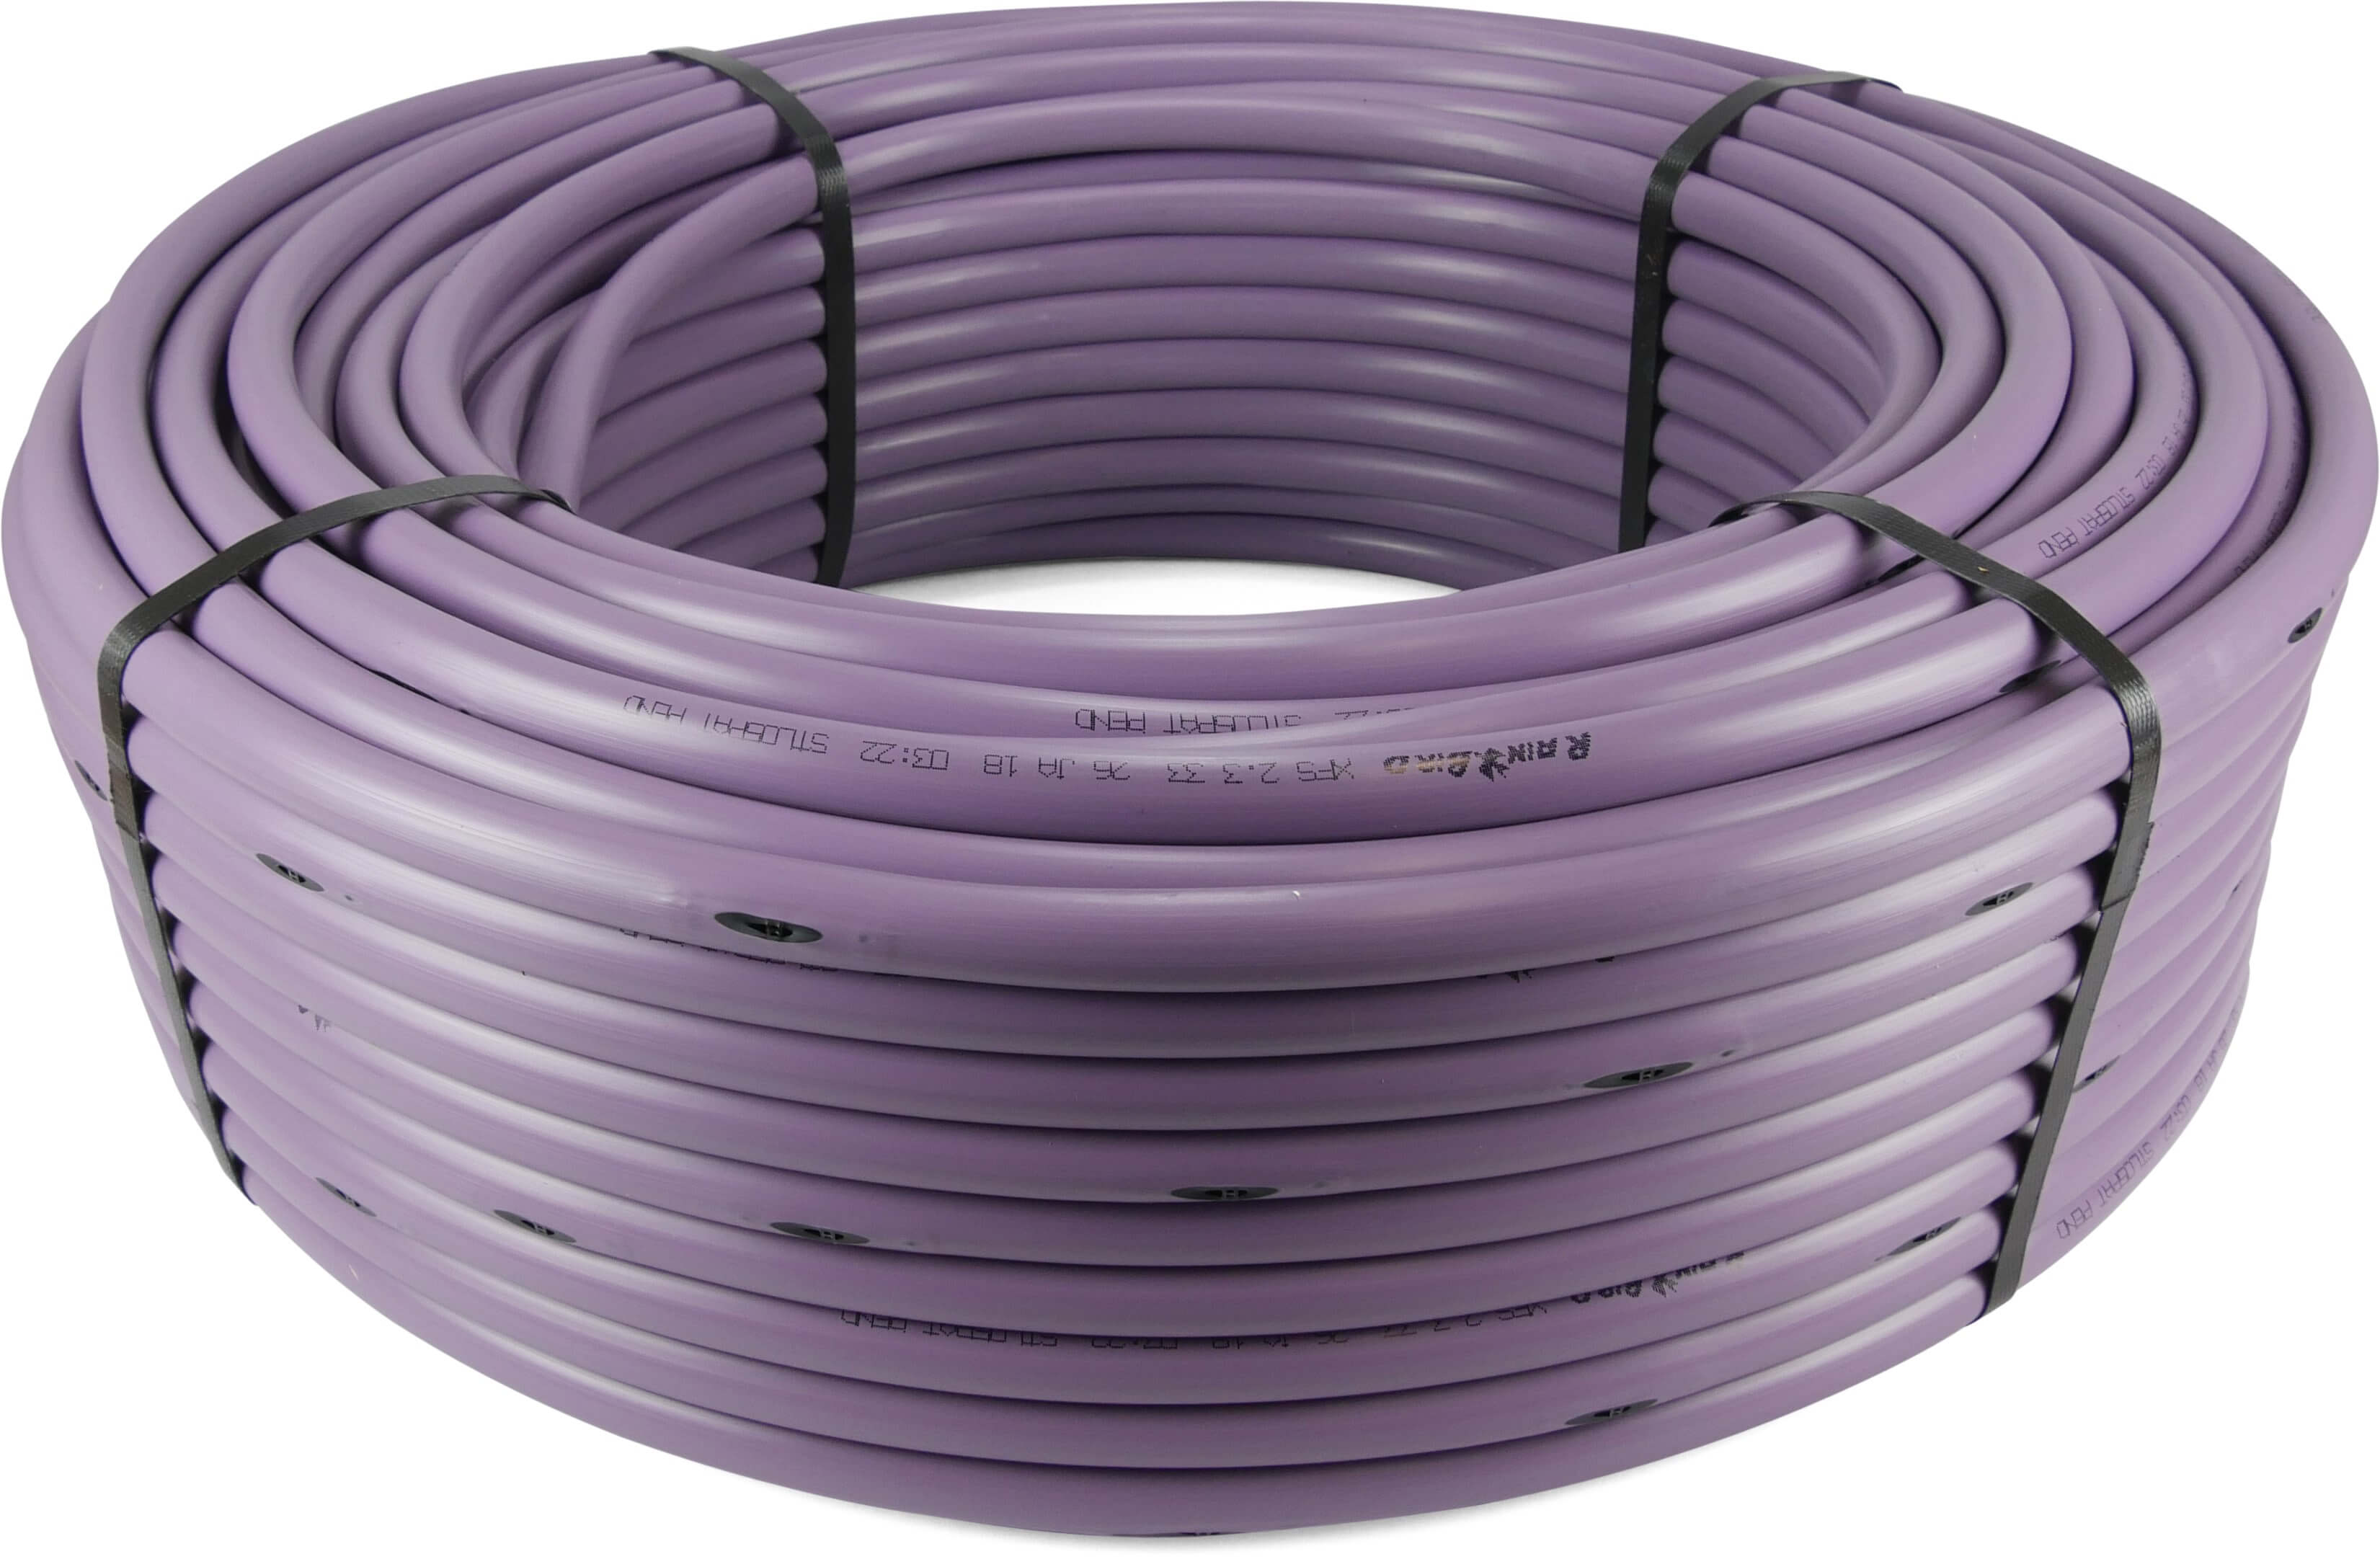 Rain Bird Drip irrigation hose PE 16 mm x 1,2 mm 2.3ltr/h 33cm purple 100m type PC inline XFS sub surface with check valve